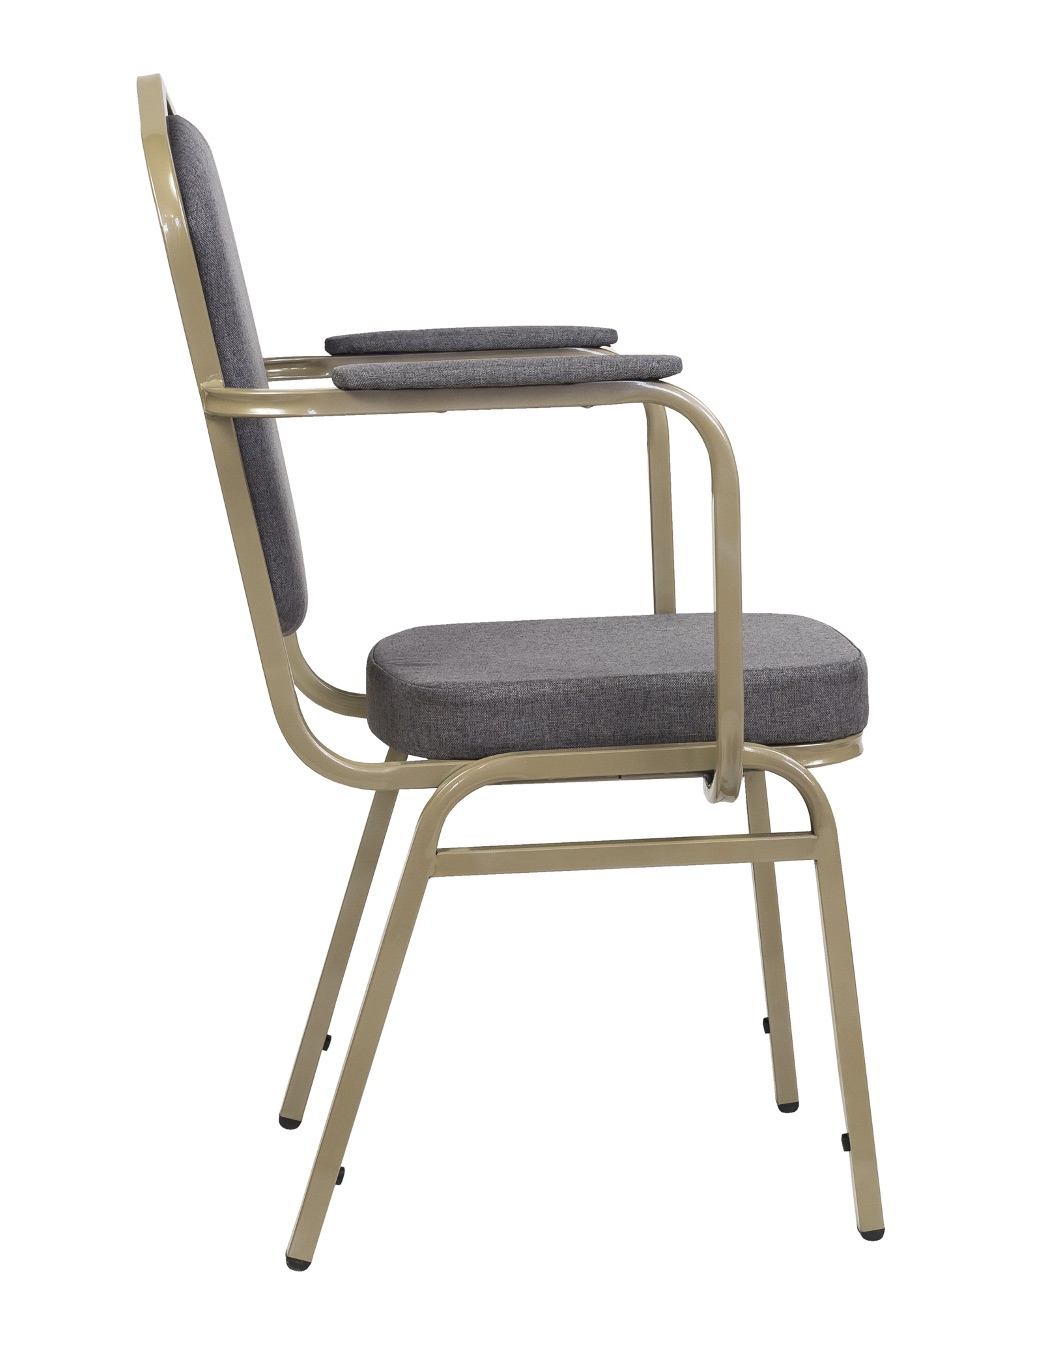 стул с металлическим сиденьем